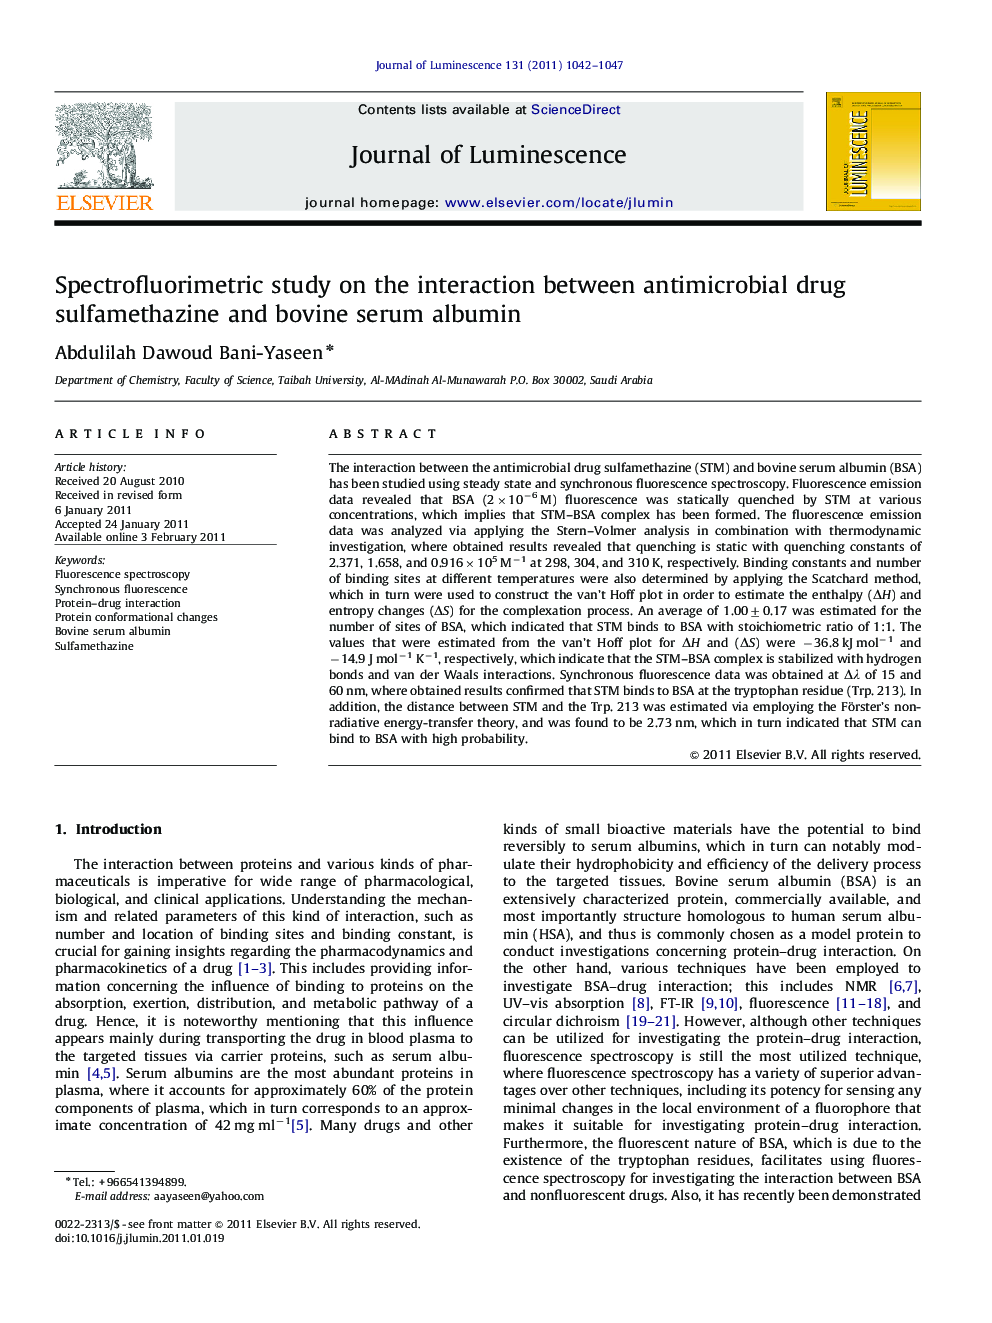 Spectrofluorimetric study on the interaction between antimicrobial drug sulfamethazine and bovine serum albumin